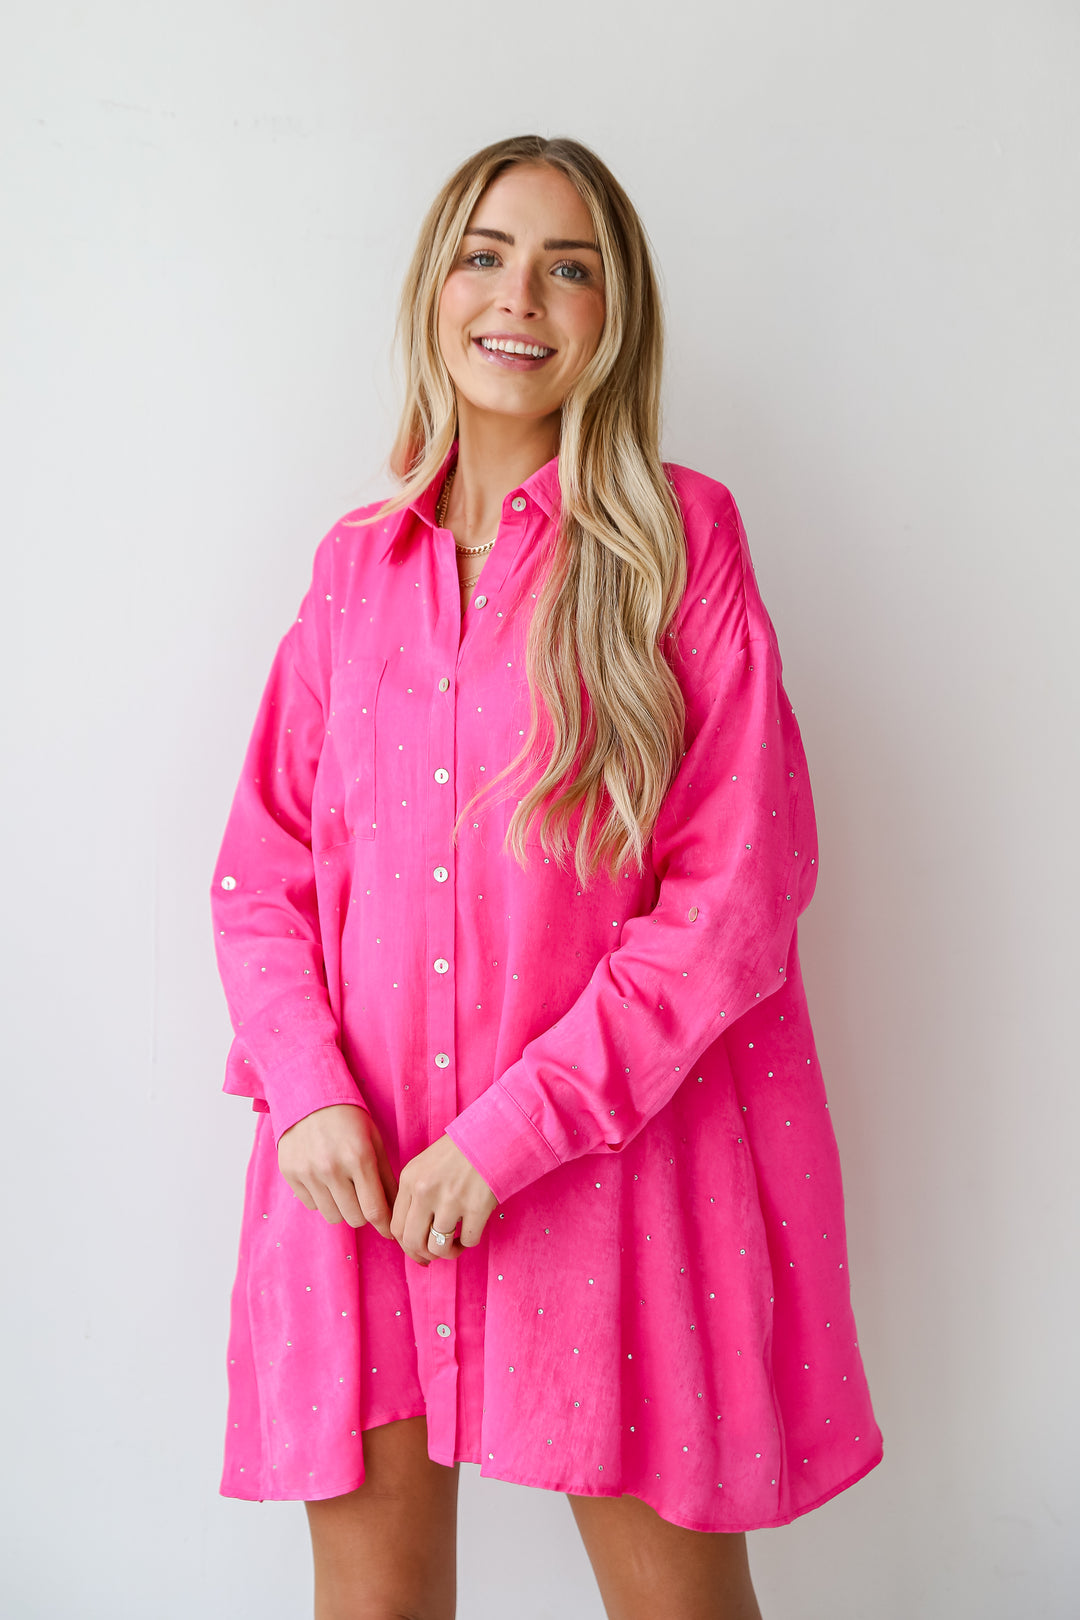 long sleeve Fuchsia Satin Rhinestone Mini Dress.  Cheap Dresses. Online cheap dresses. Pink Dress. Online Women's Boutique